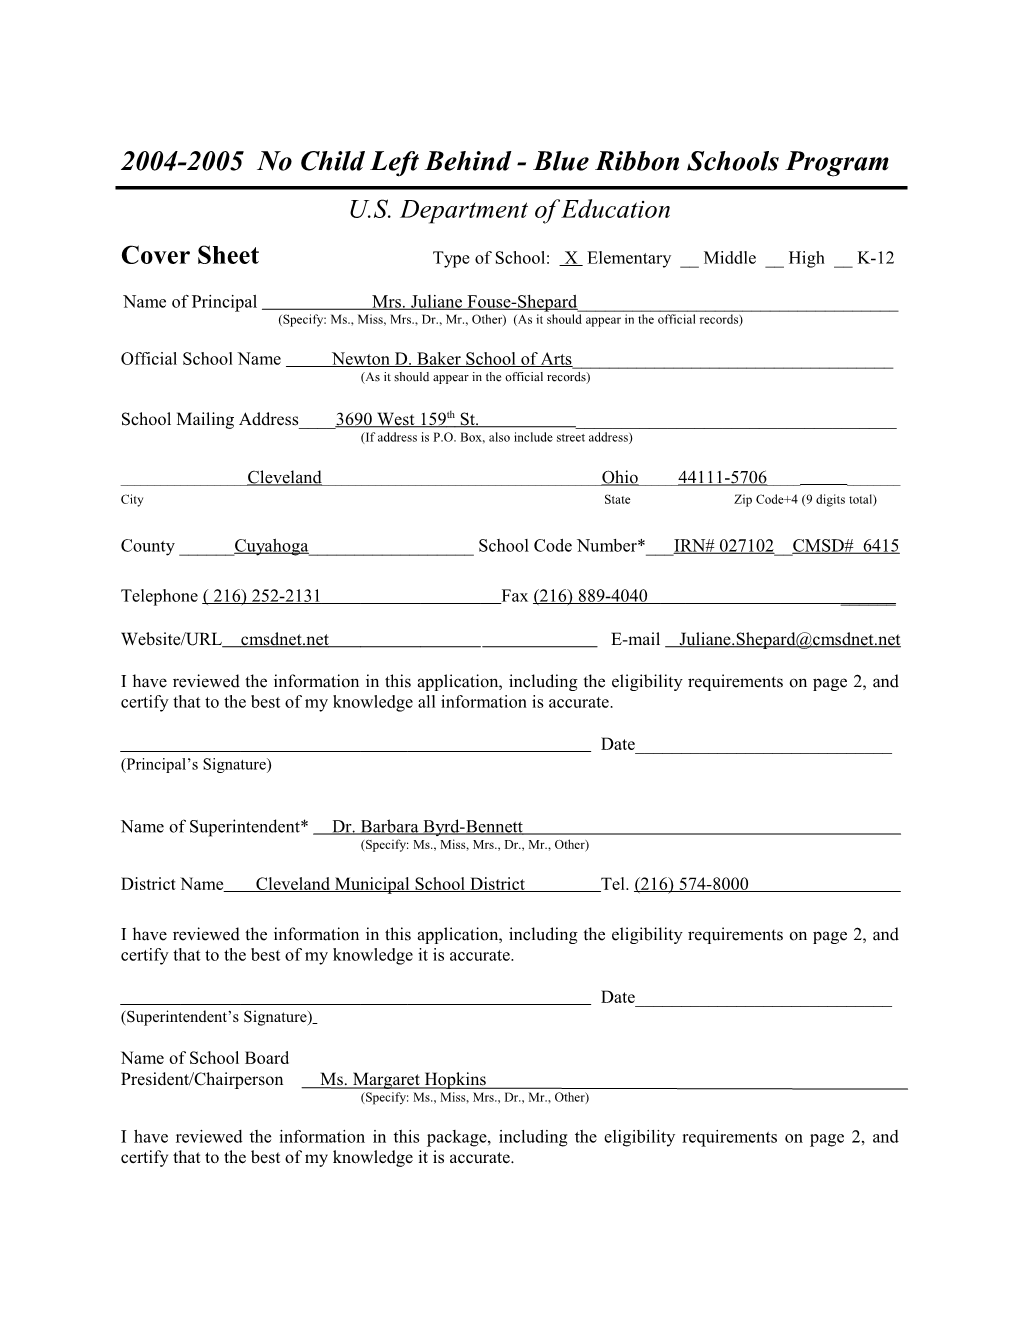 Newton D. Baker School of the Arts Elementary School Application: 2004-2005, No Child Left